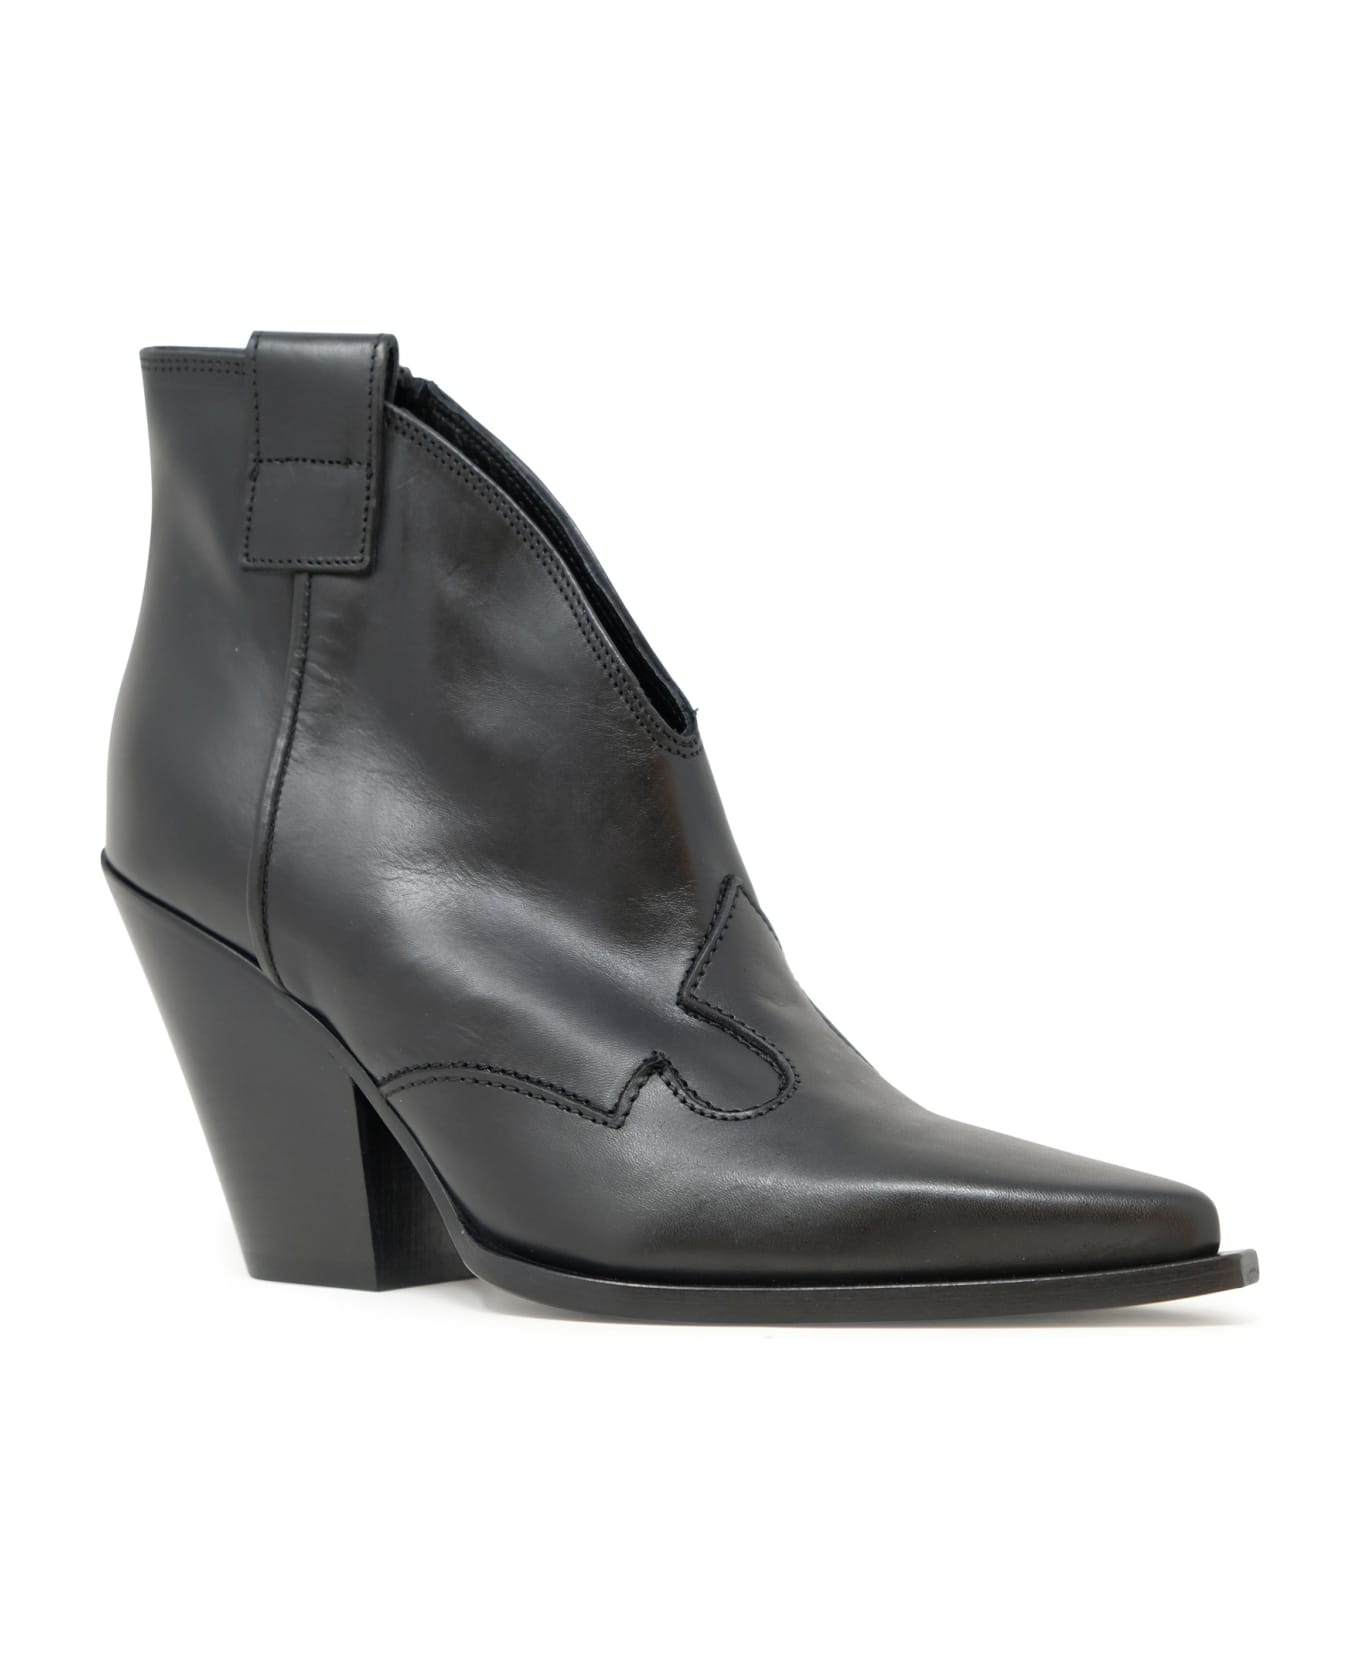 Elena Iachi Leather Ankle Boots